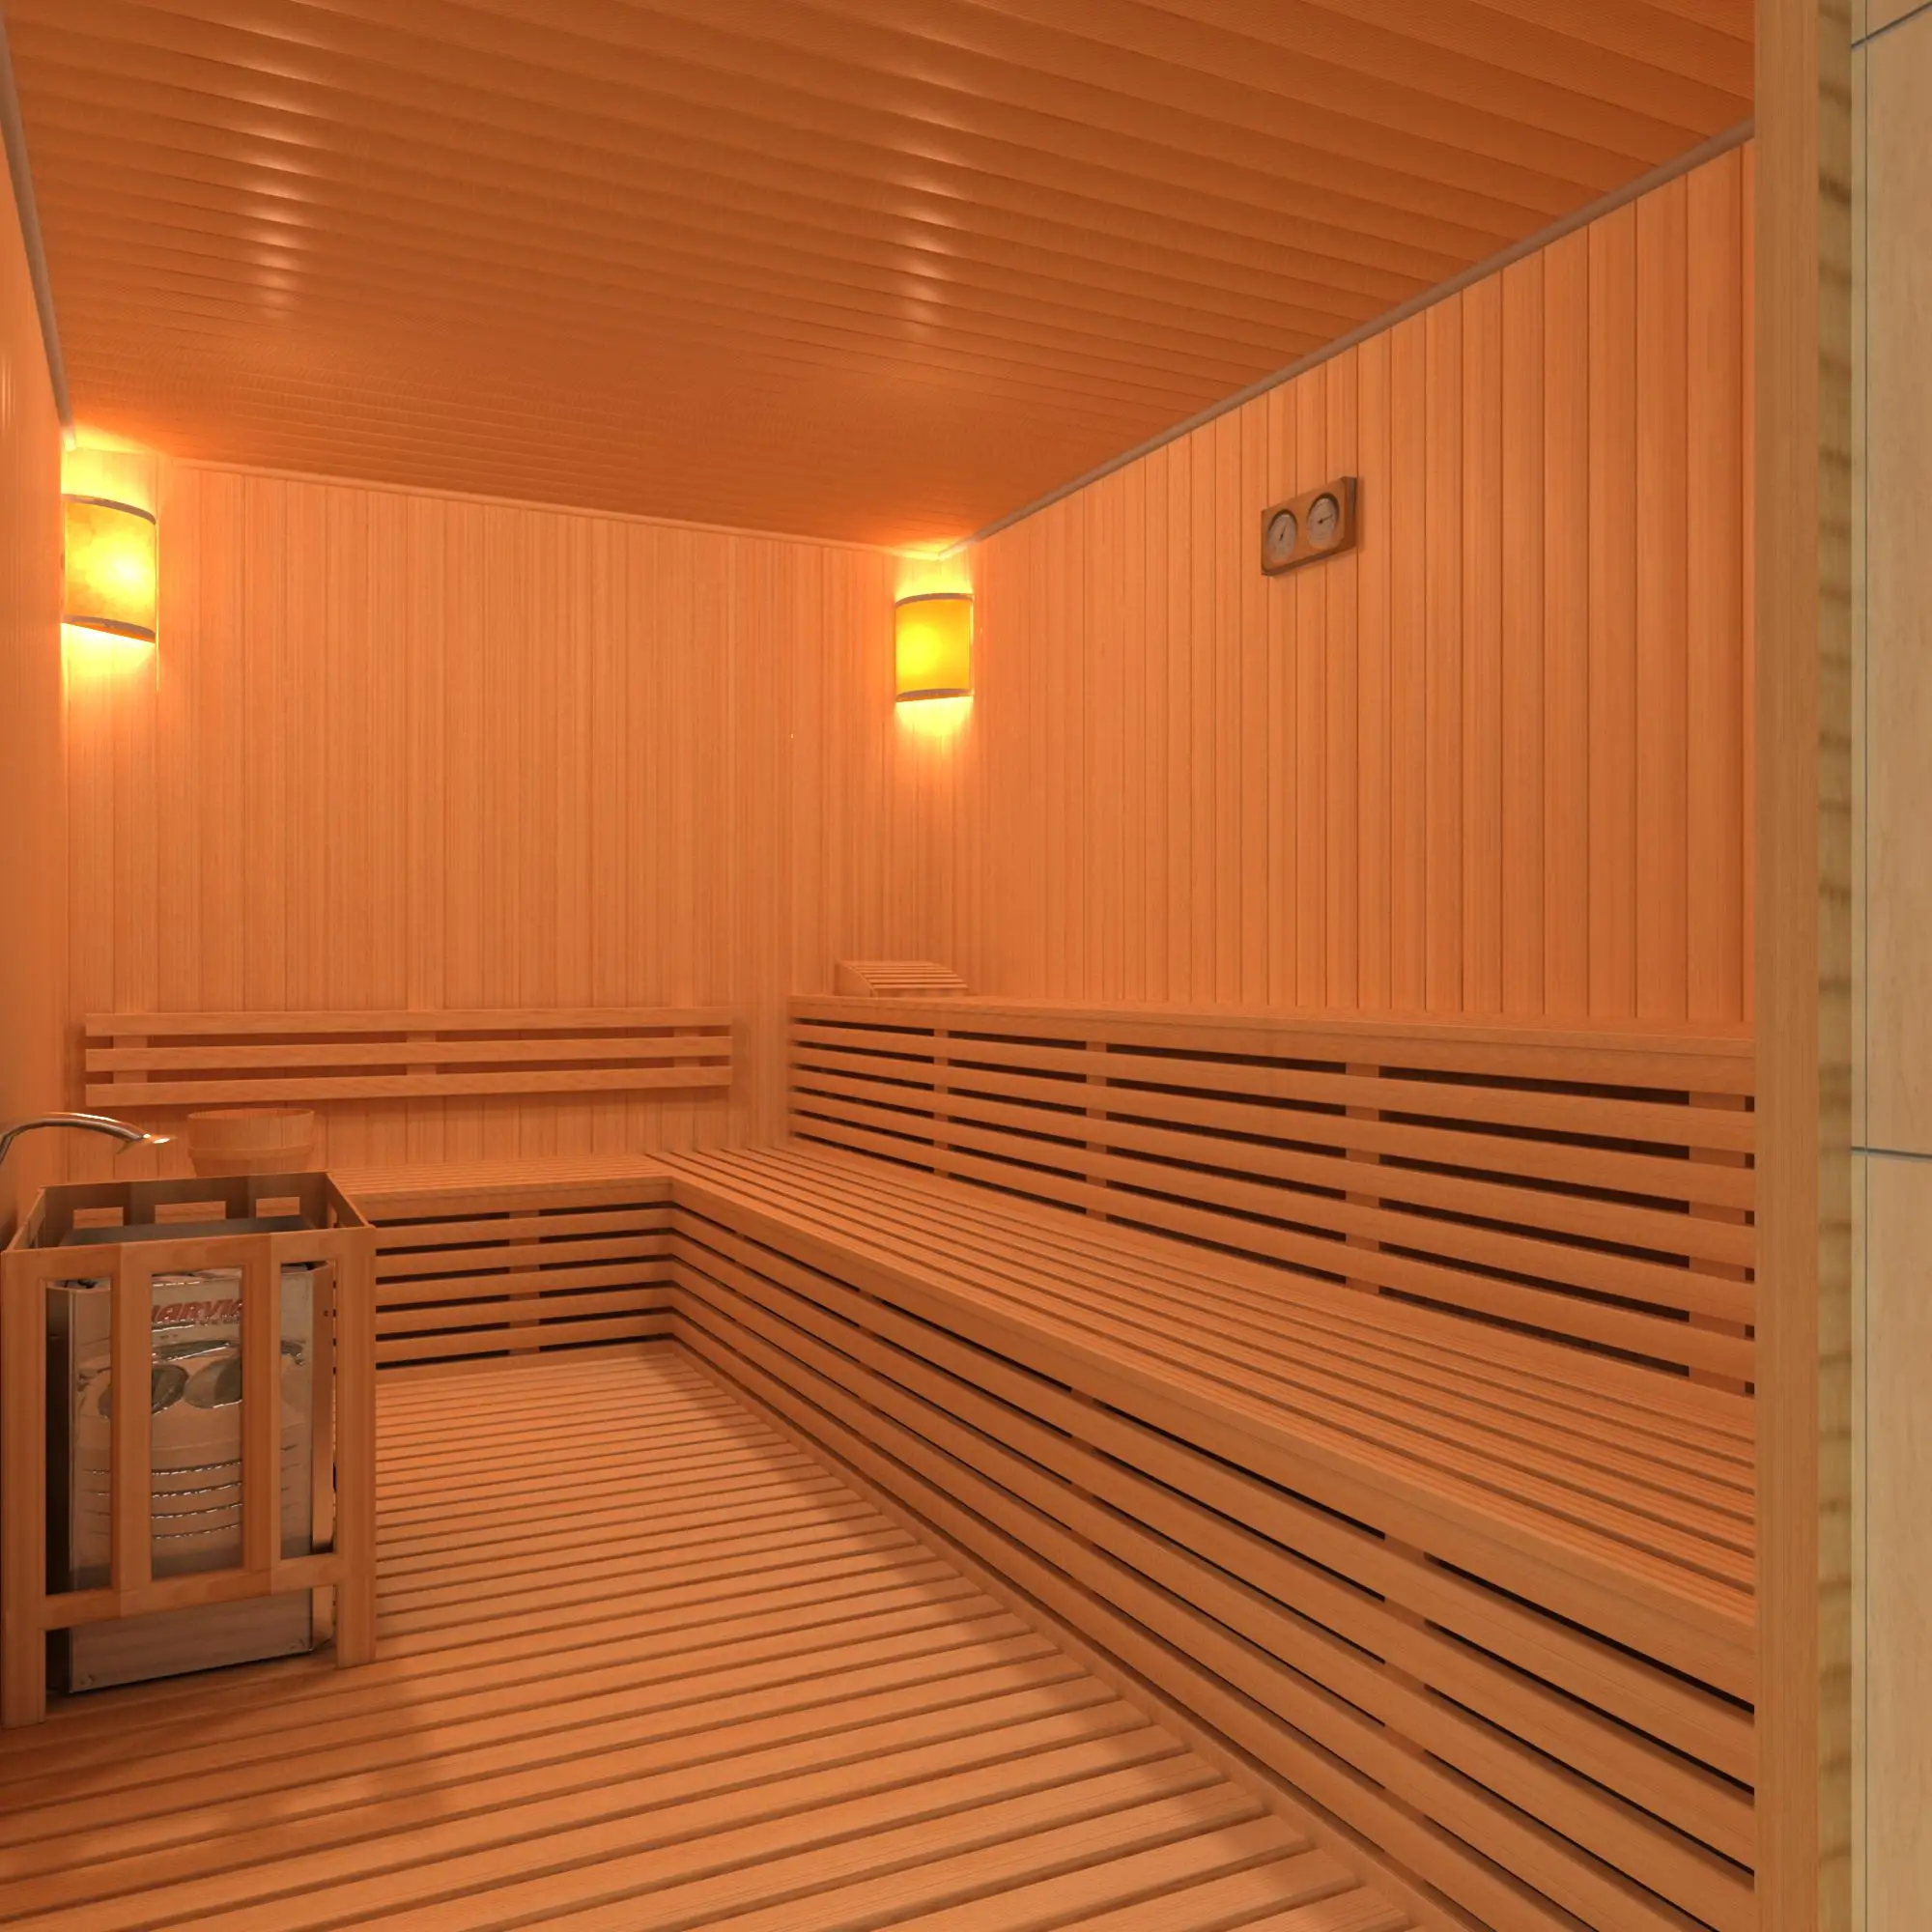 The steam sauna room фото 89